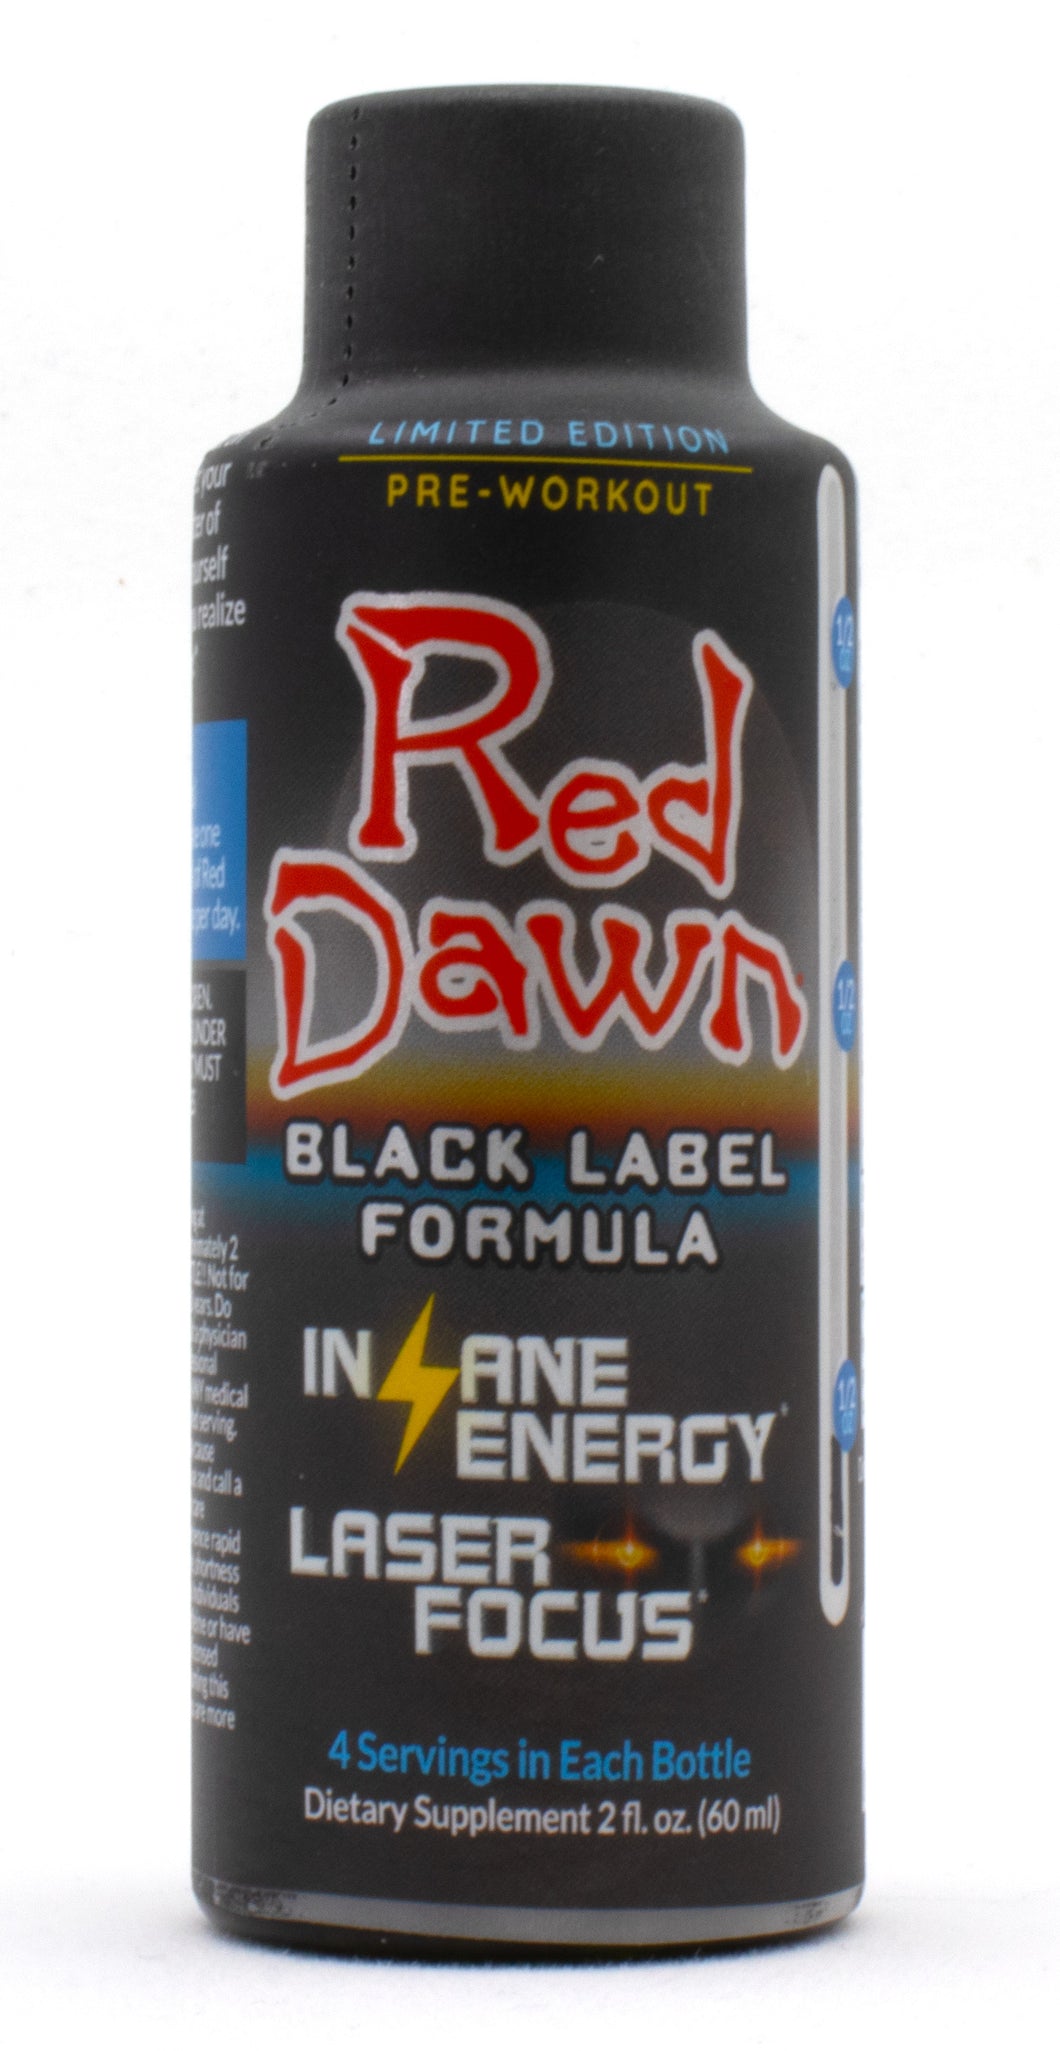 Red Dawn Black Label (12 Count Box)